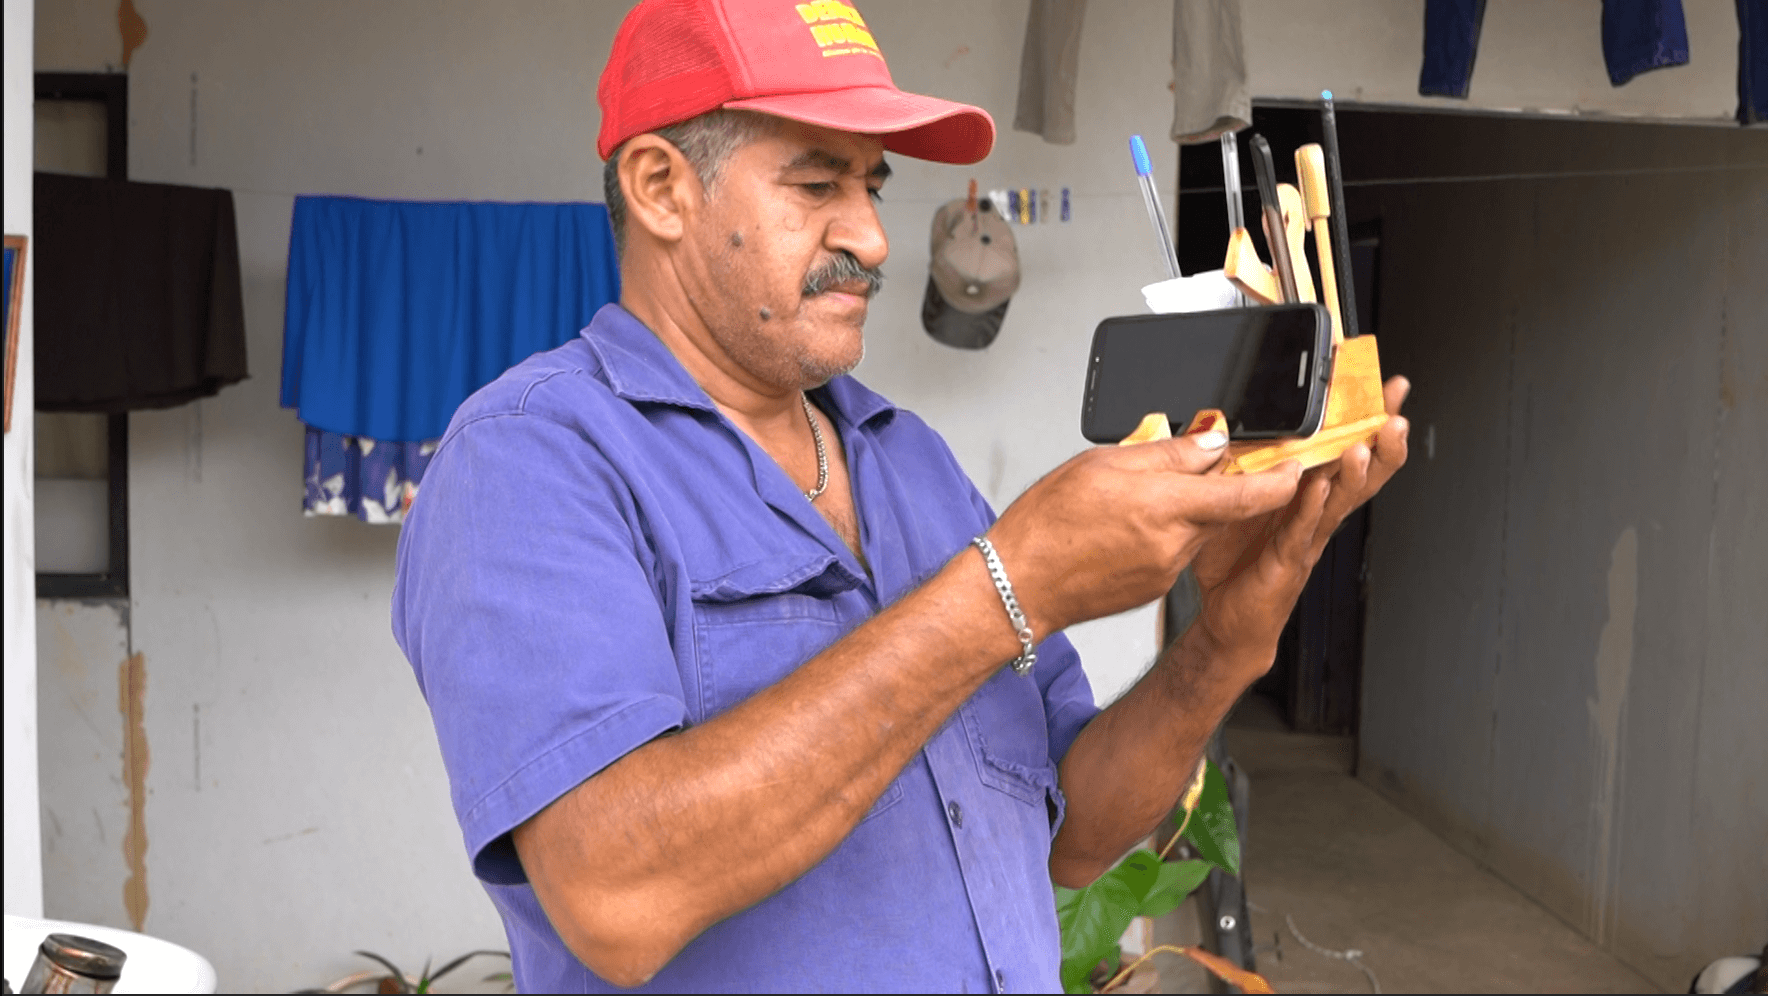 A man shows his pencil holder creation